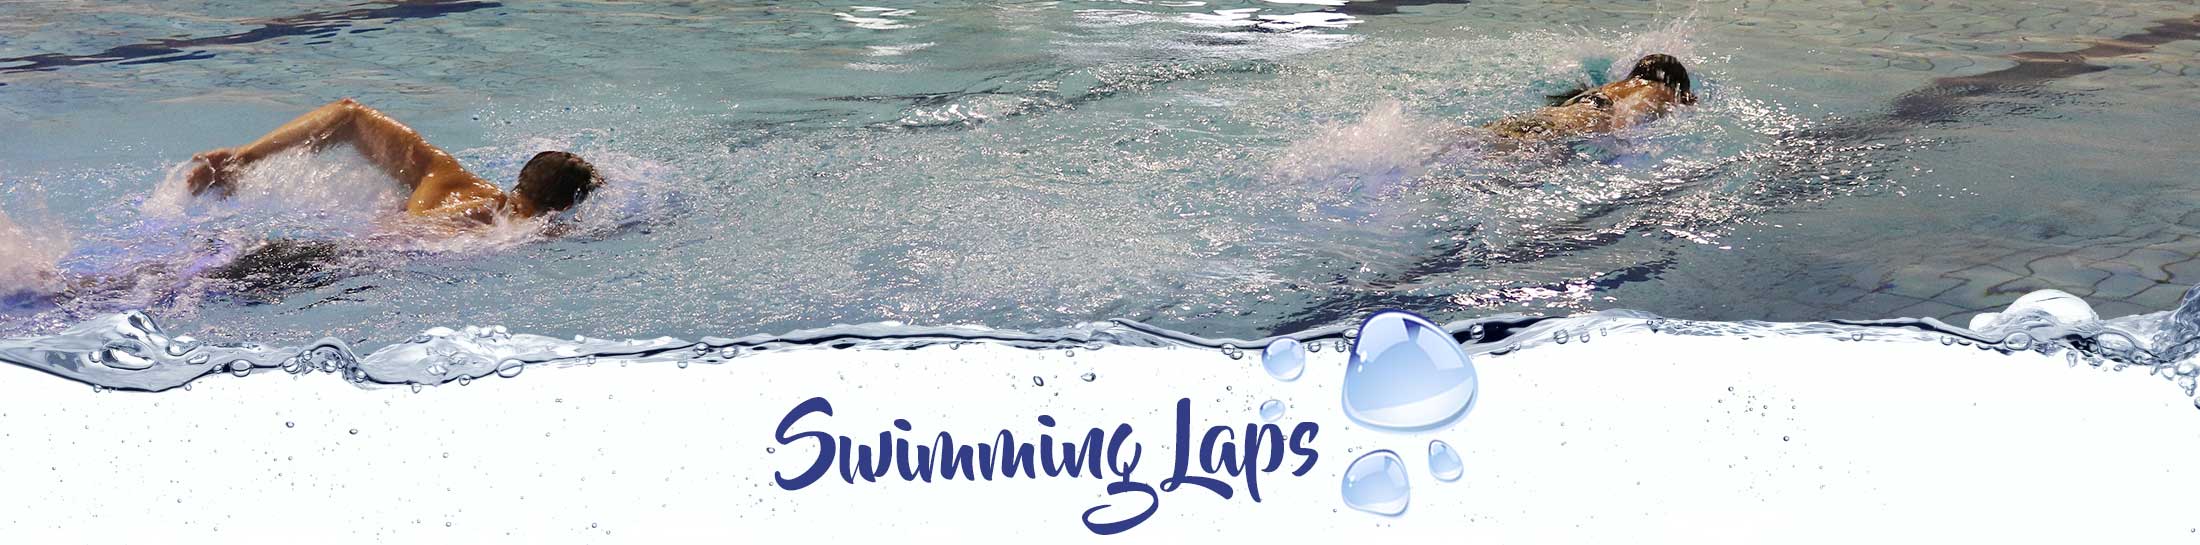 Swimming laps Swimfun Joure